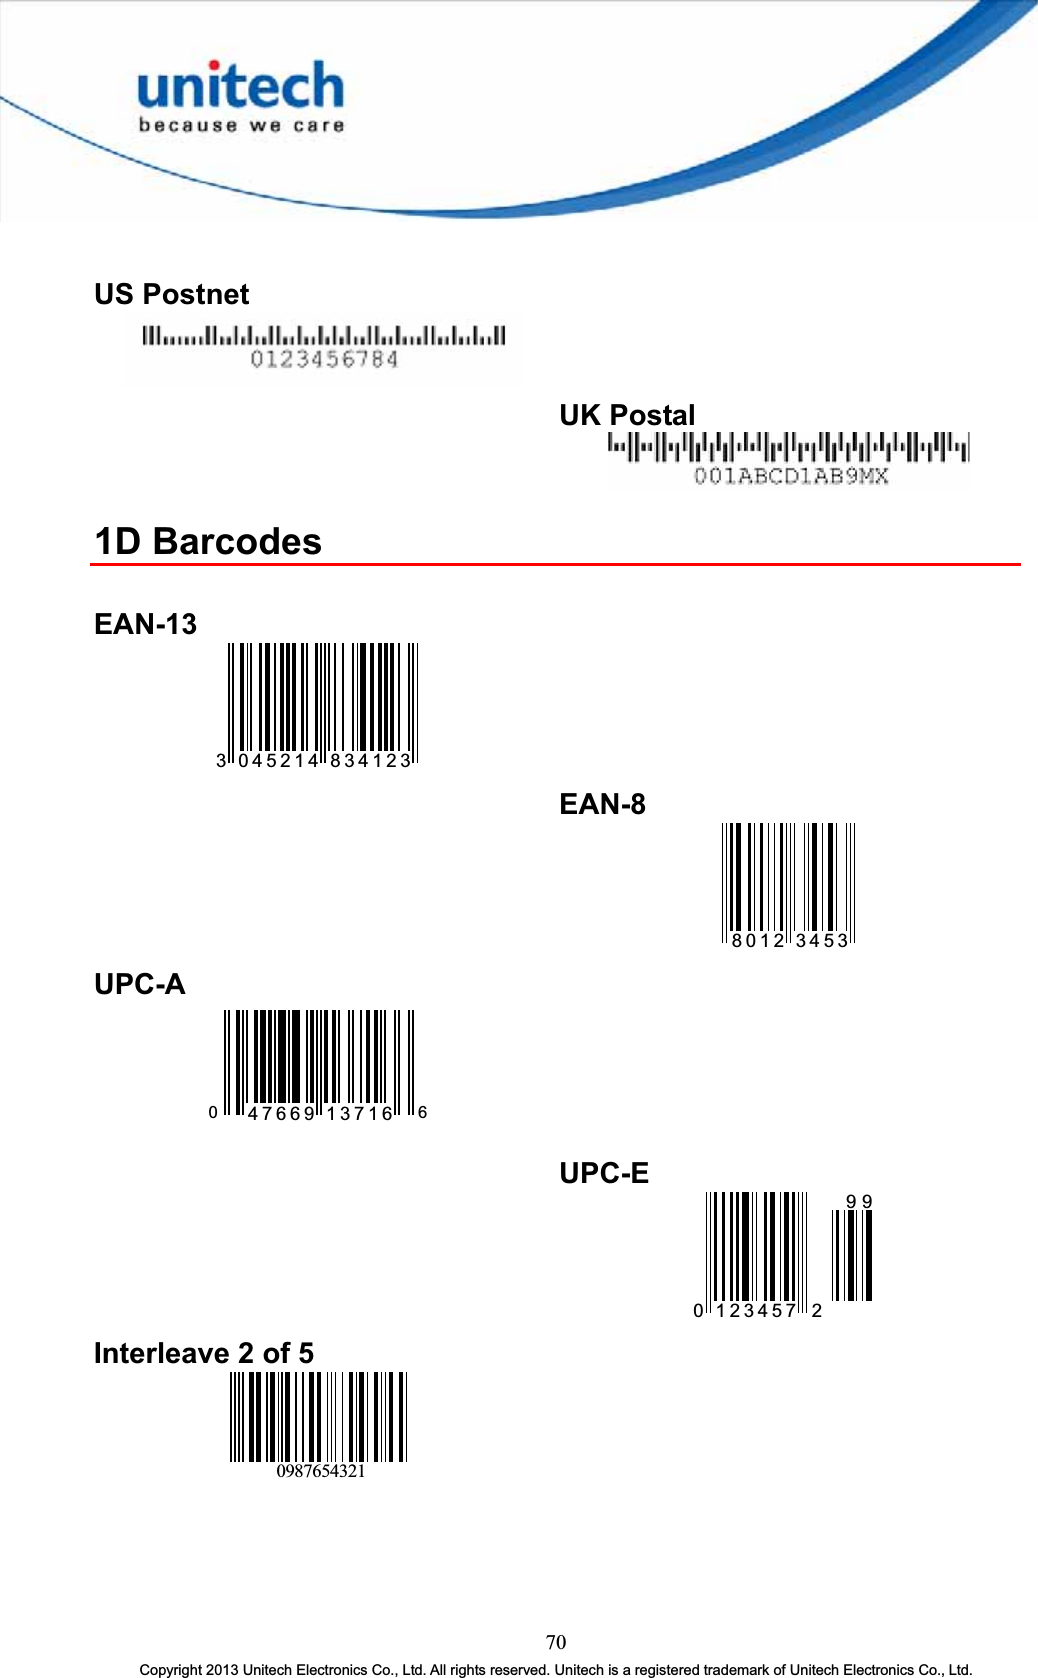 US Postnet UK Postal 1D Barcodes EAN-133 045214 834123EAN-88012 3453UPC-AUPC-E0212345799Interleave 2 of 5 09876543210647669 1371670Copyright 2013 Unitech Electronics Co., Ltd. All rights reserved. Unitech is a registered trademark of Unitech Electronics Co., Ltd. 